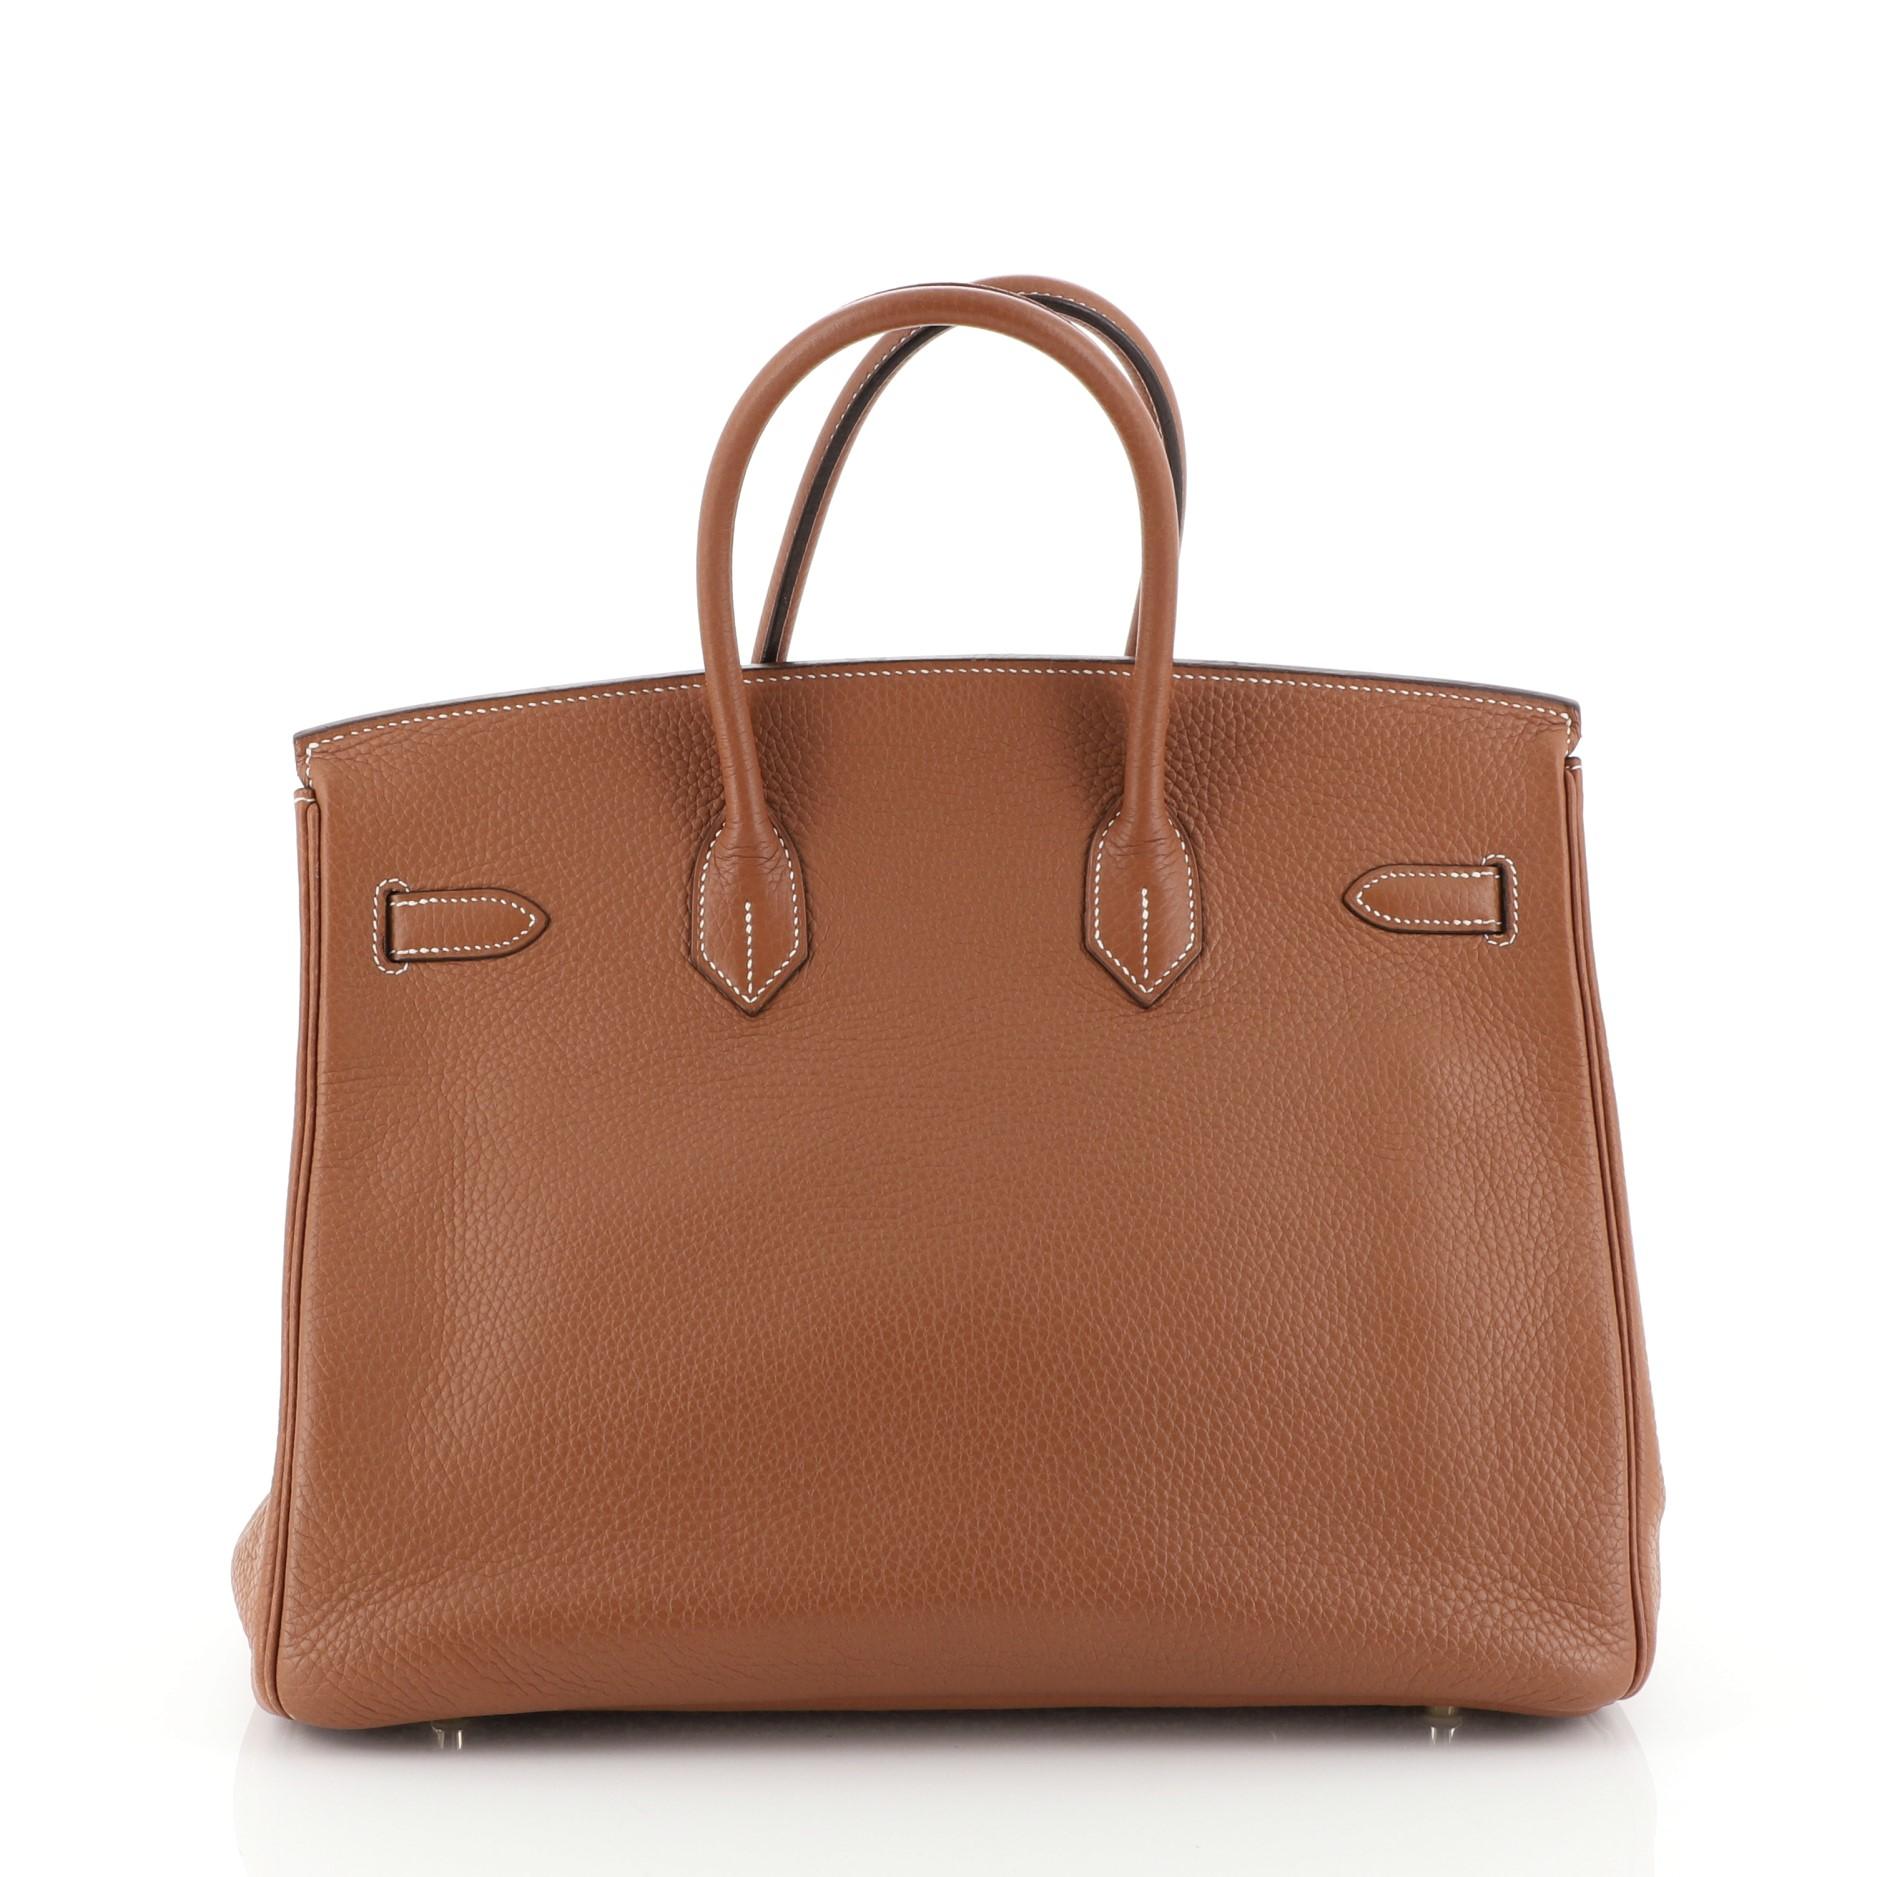 Brown Hermes Birkin Handbag